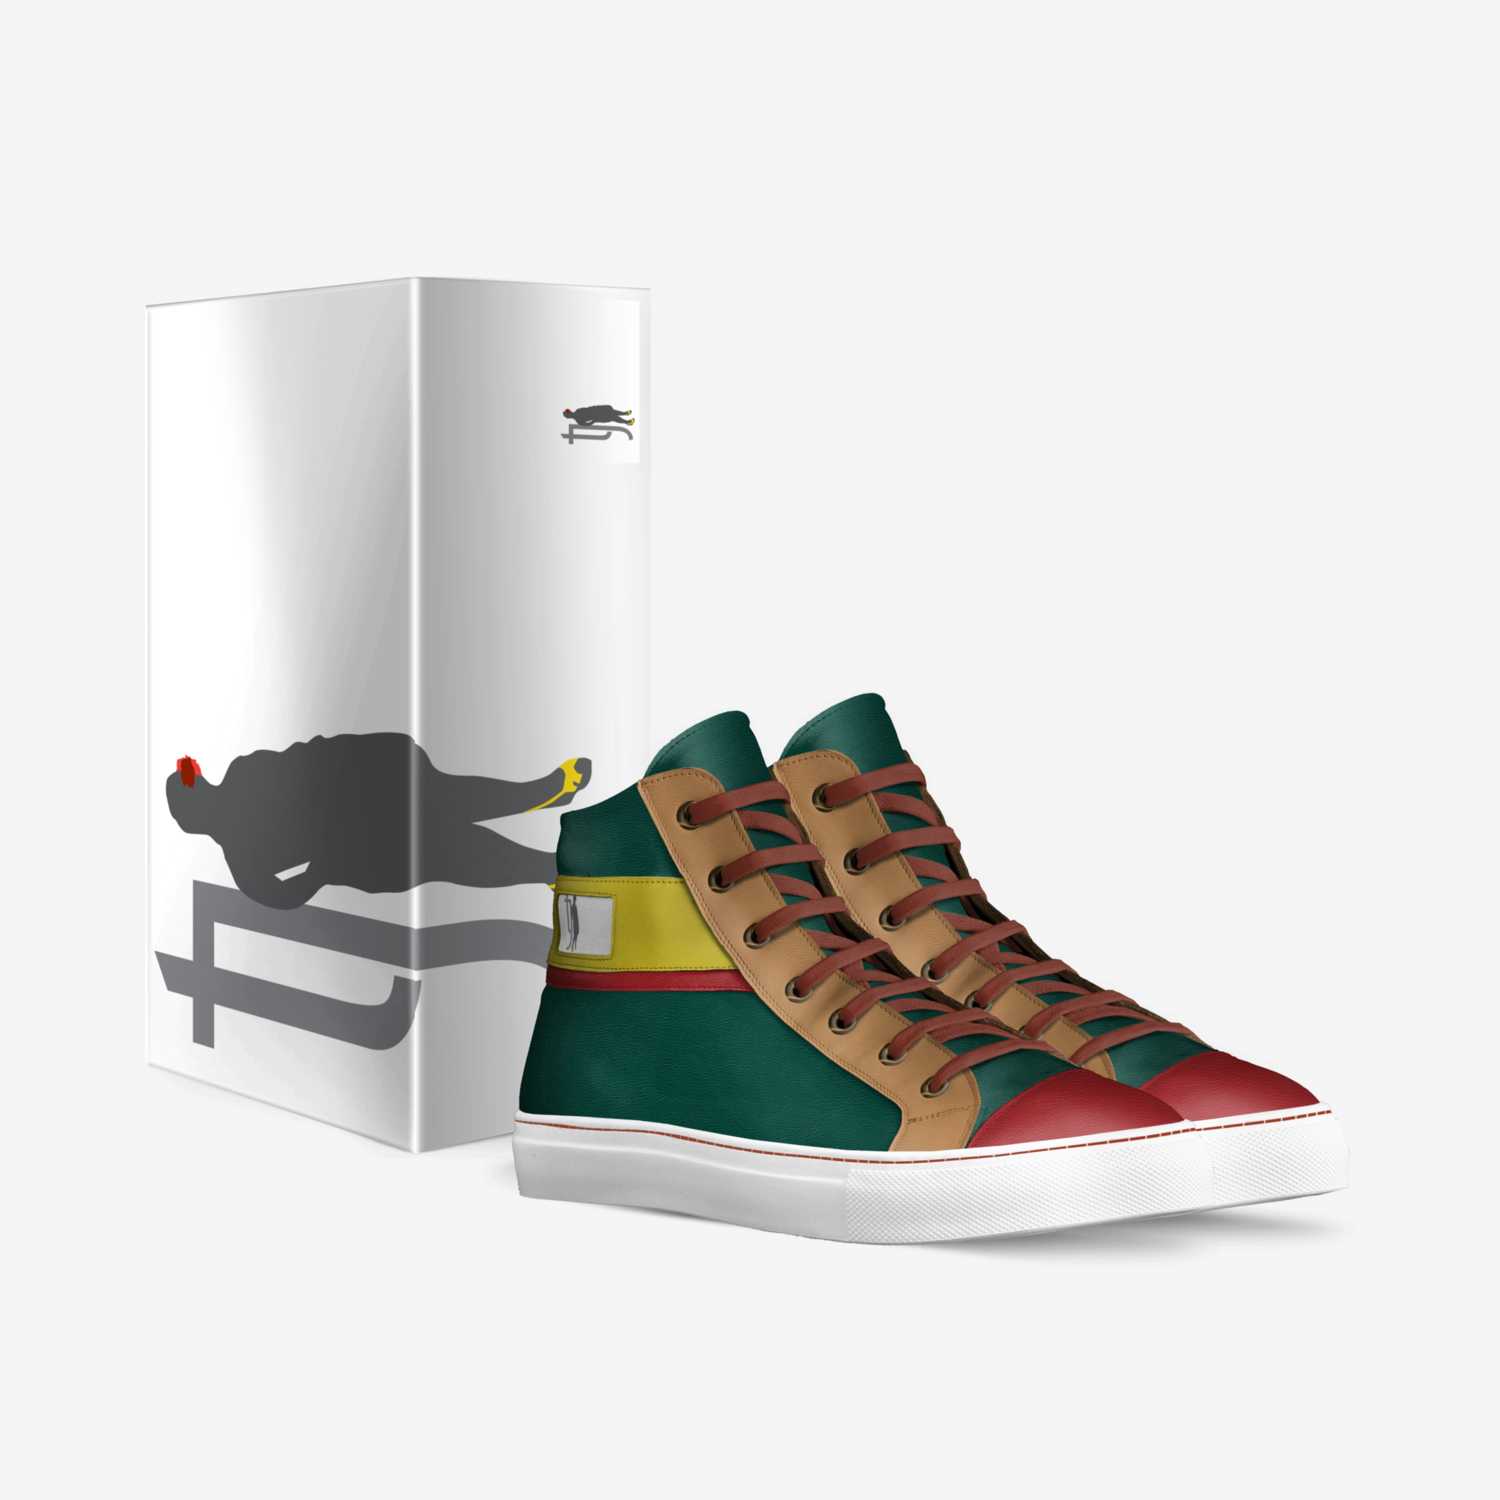 Unorthodox Sole custom made in Italy shoes by Tamara Joseph | Box view